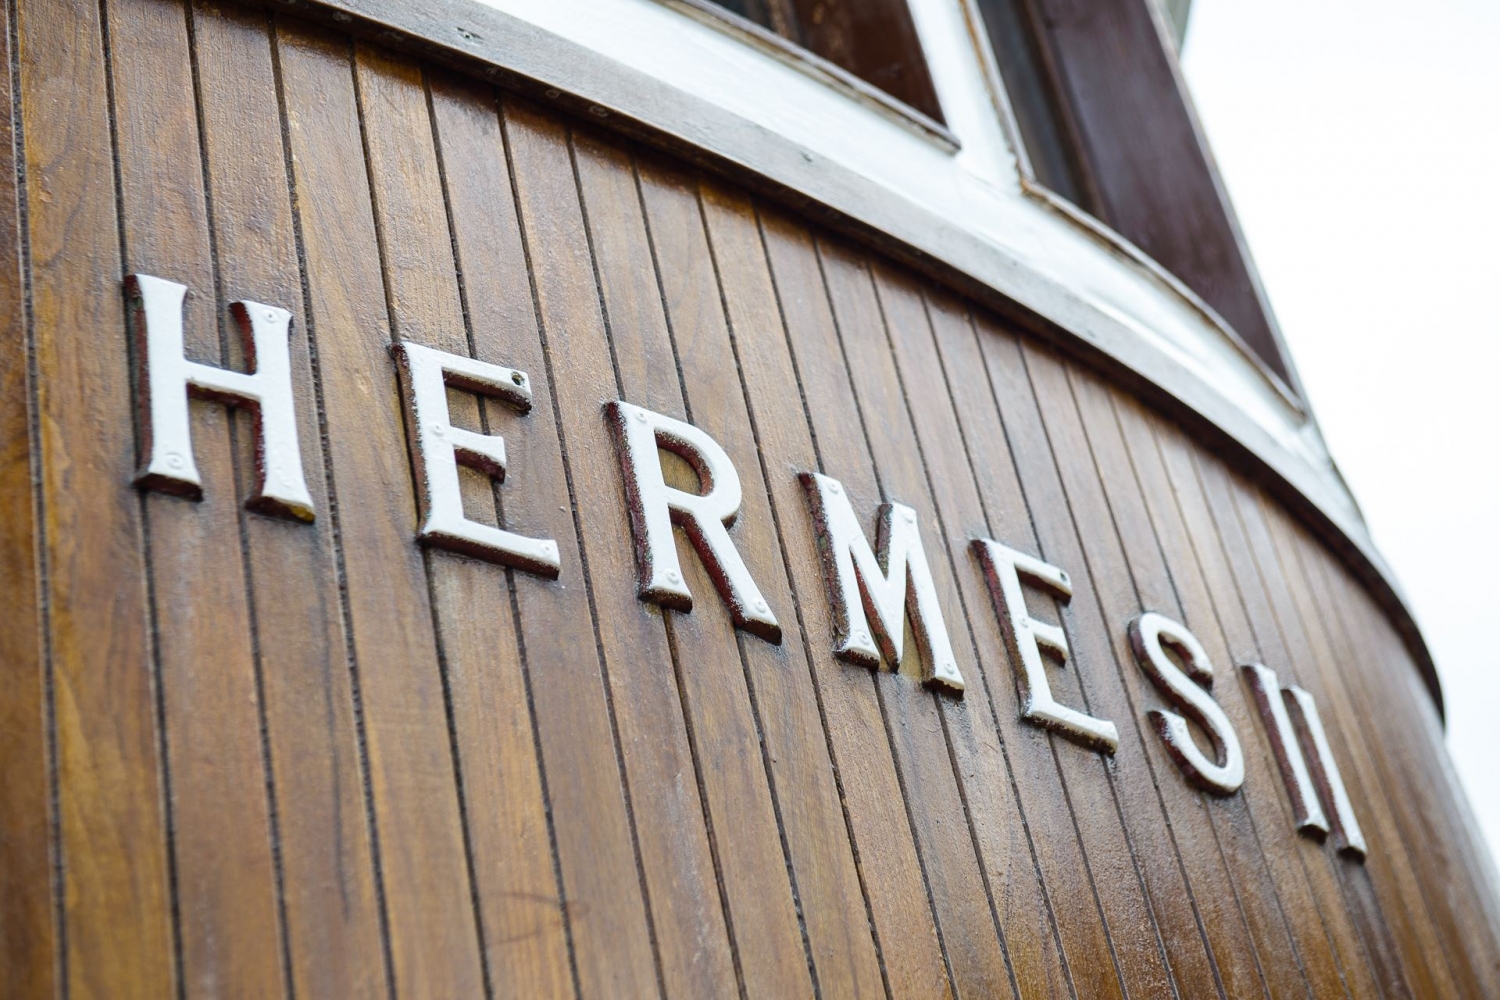 Hermes II on the boat